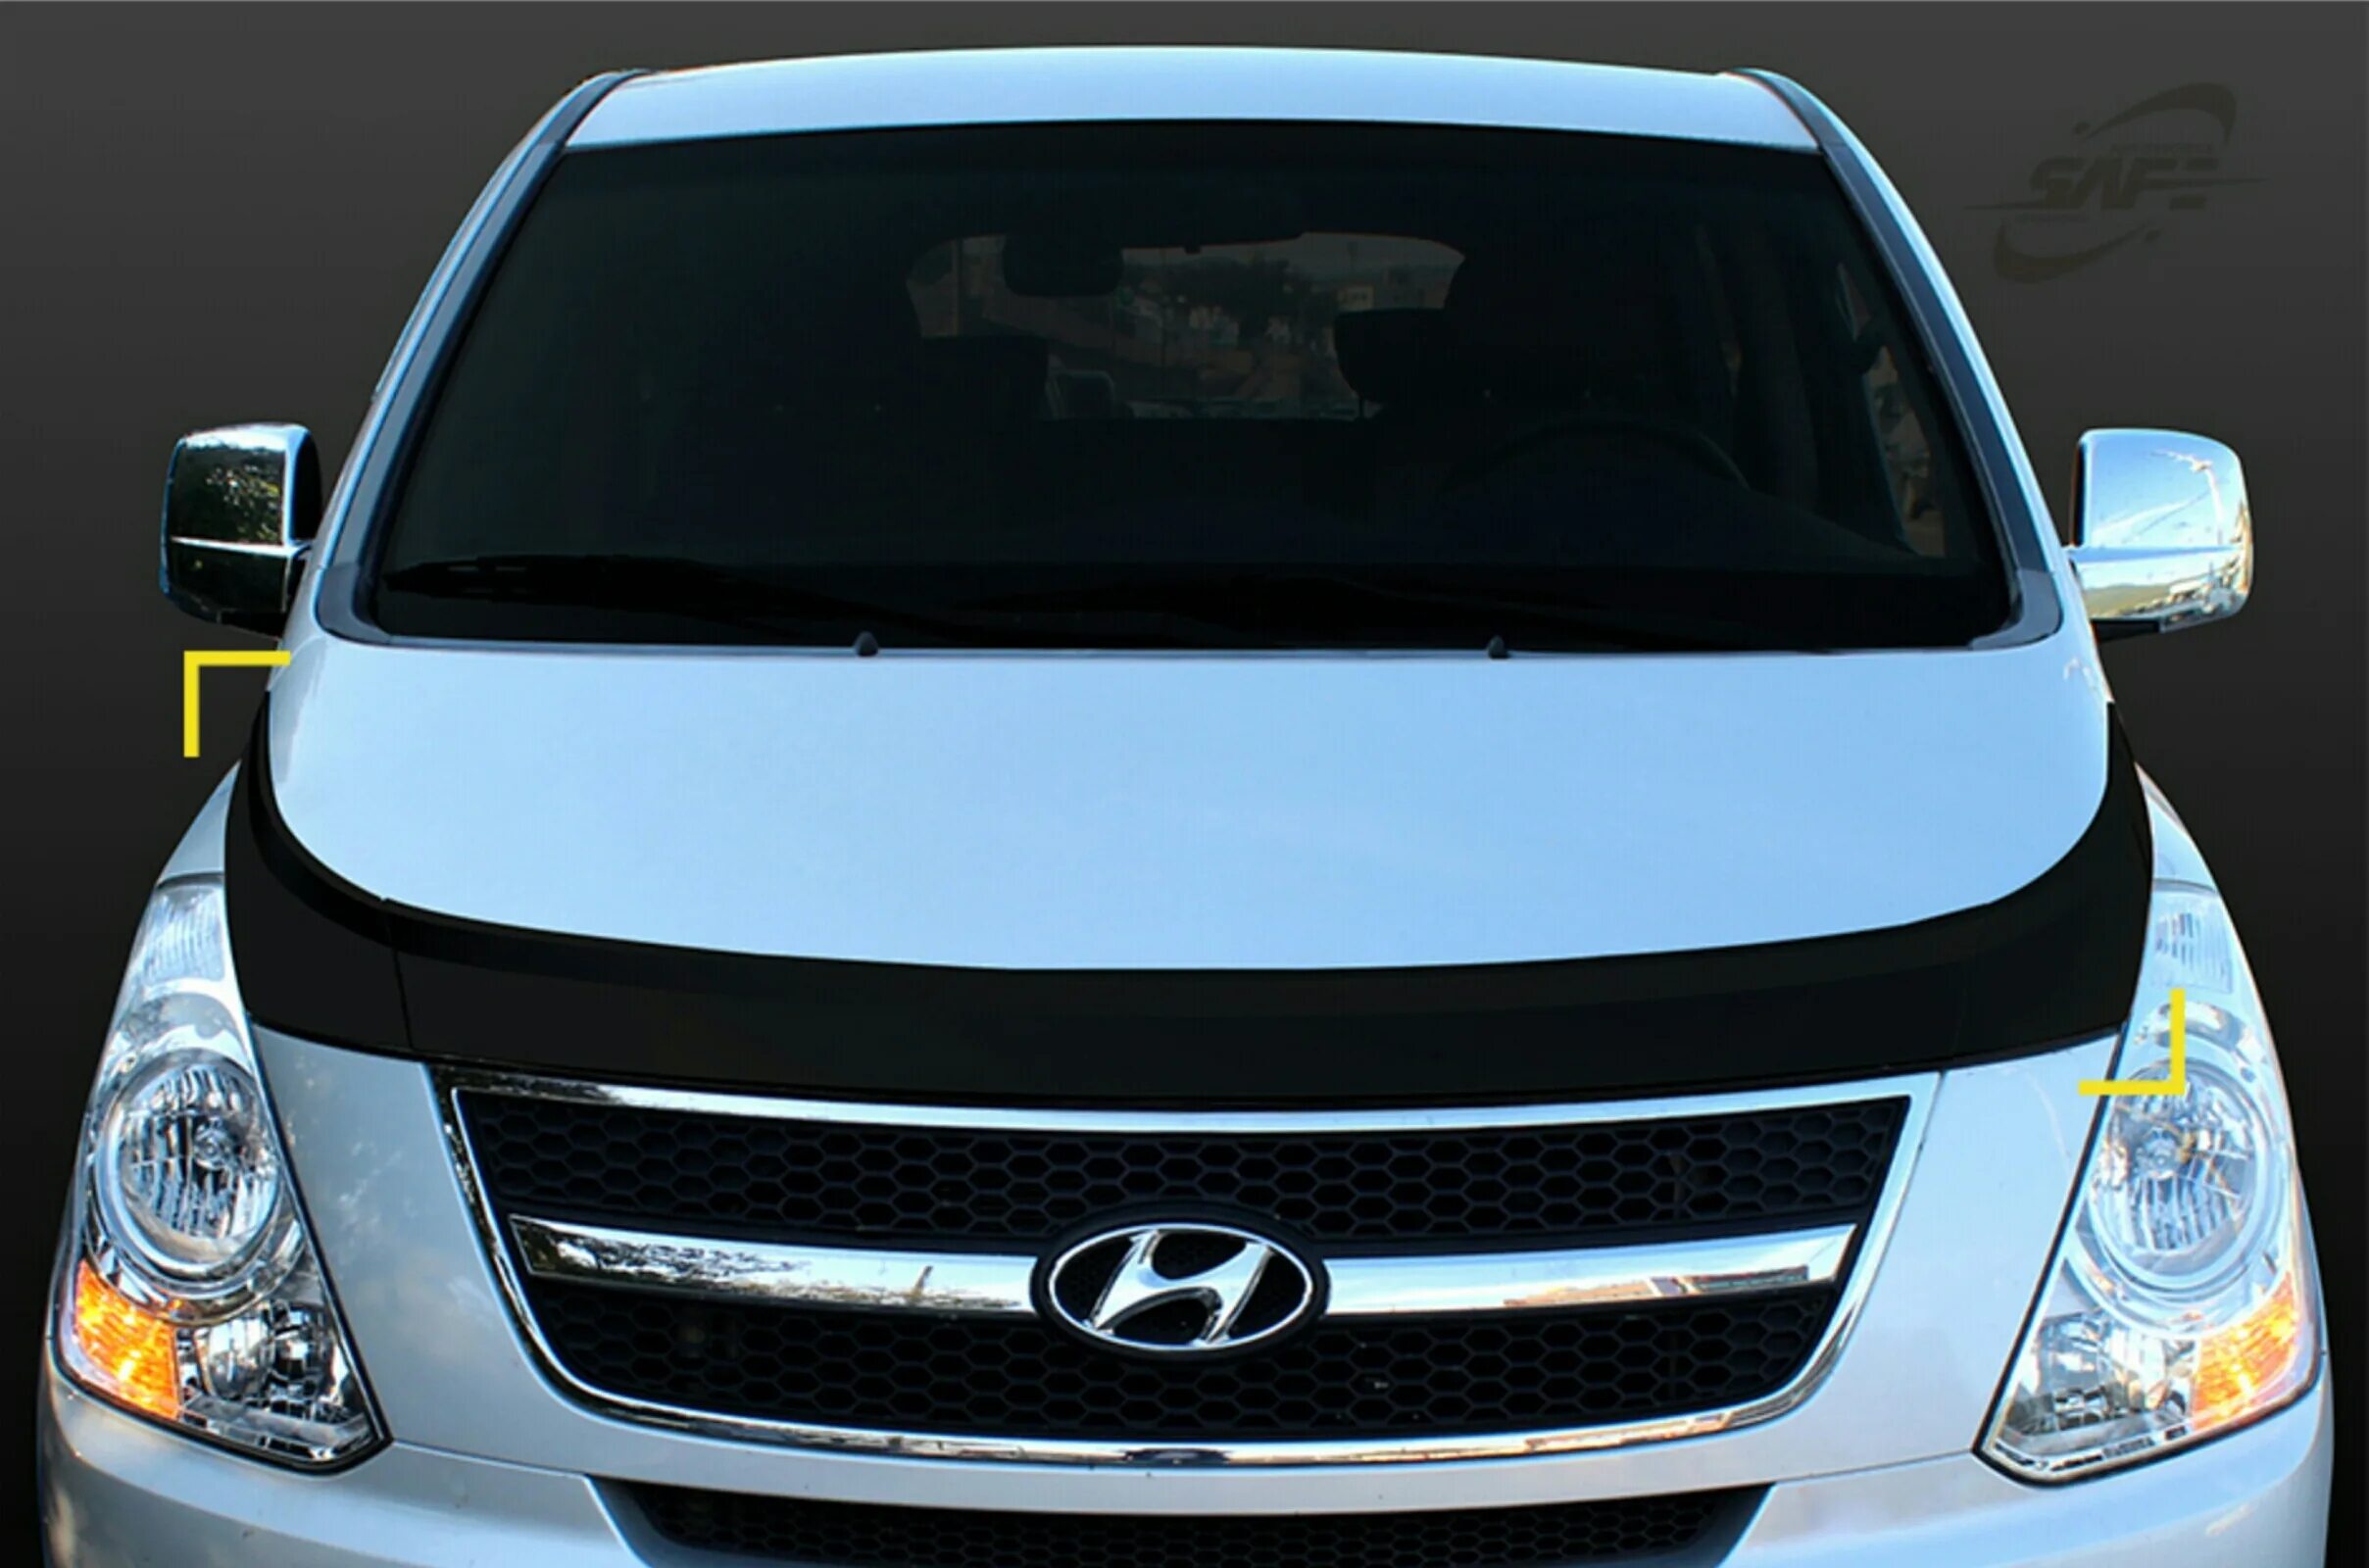 Хендай старекс капот. Дефлекторы Hyundai h1 2007. Дефлектор на капот Hyundai Grand Starex 2018. Дефлектор капота Hyundai Grand Starex. Дефлектор капота Гранд Старекс 2019.